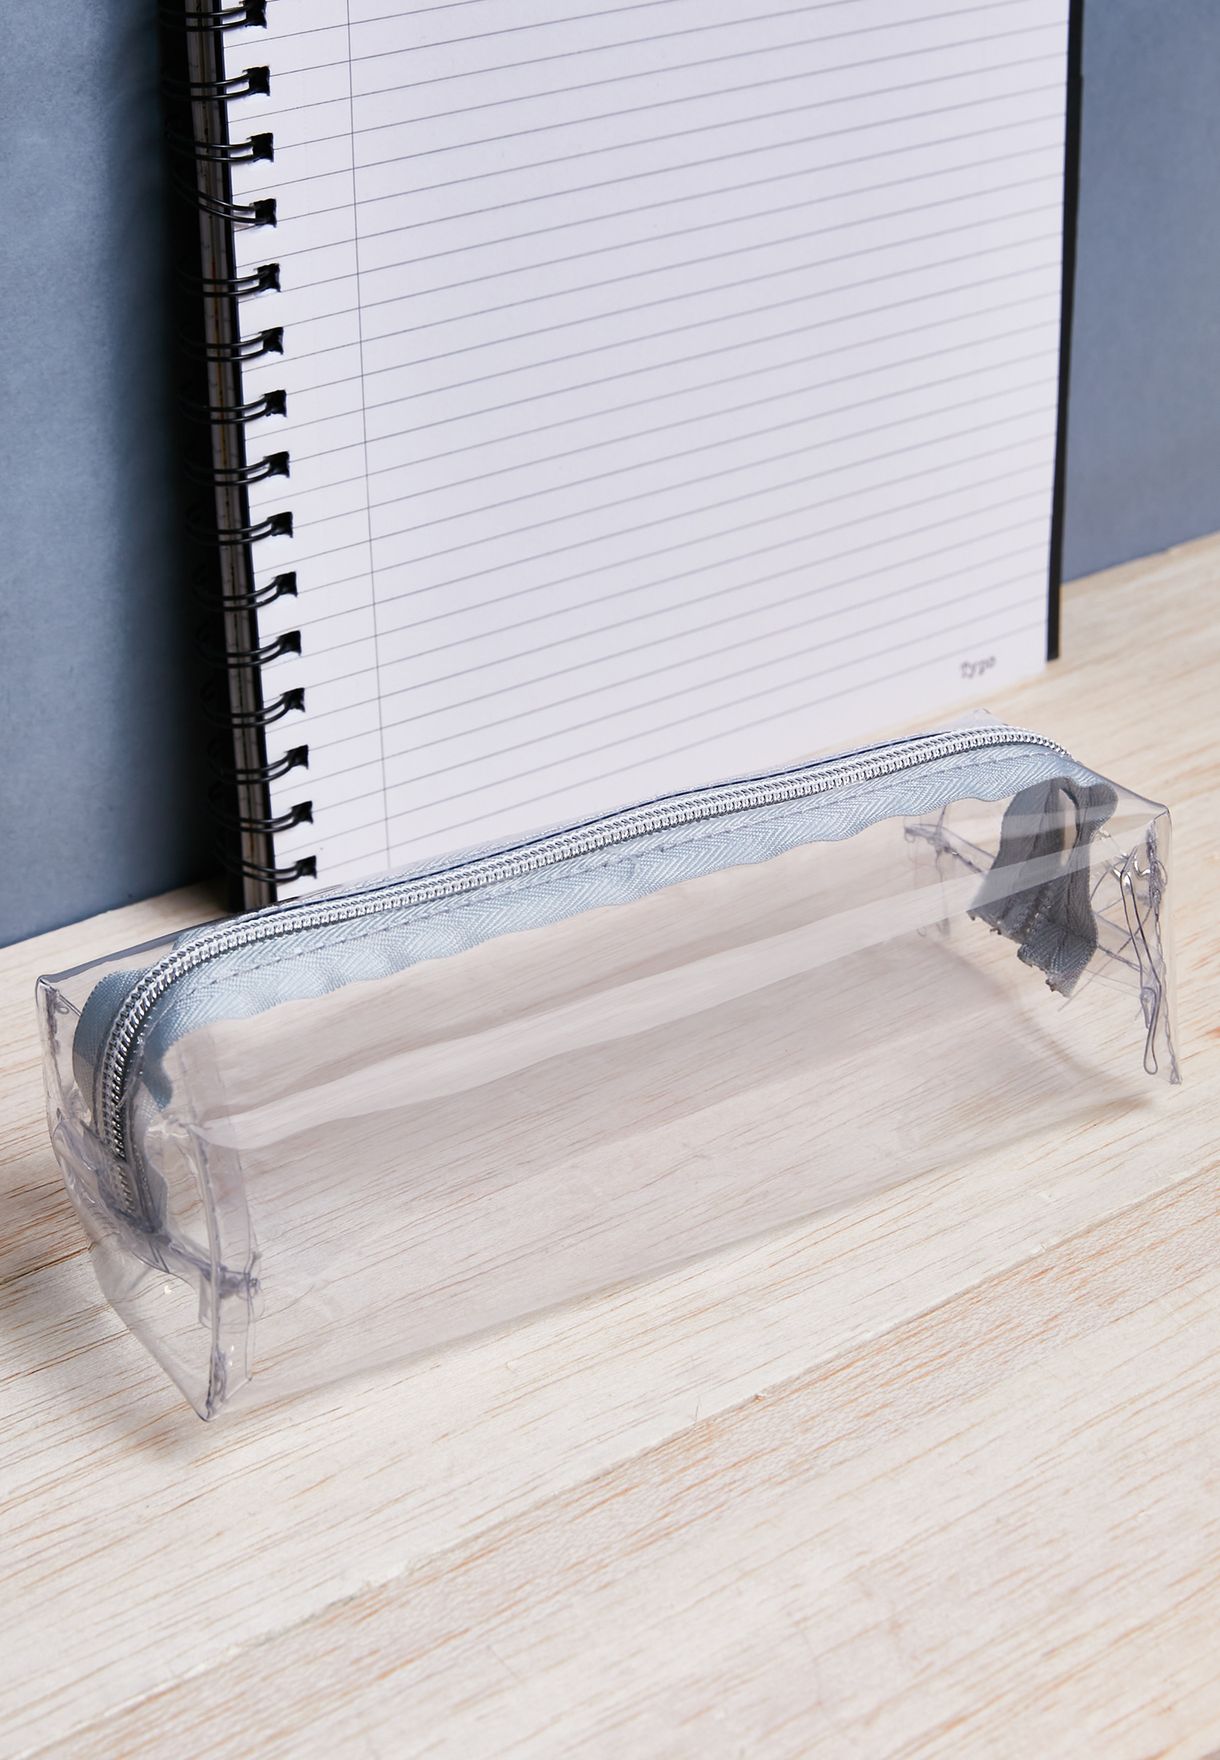 Transparent Pencil Case